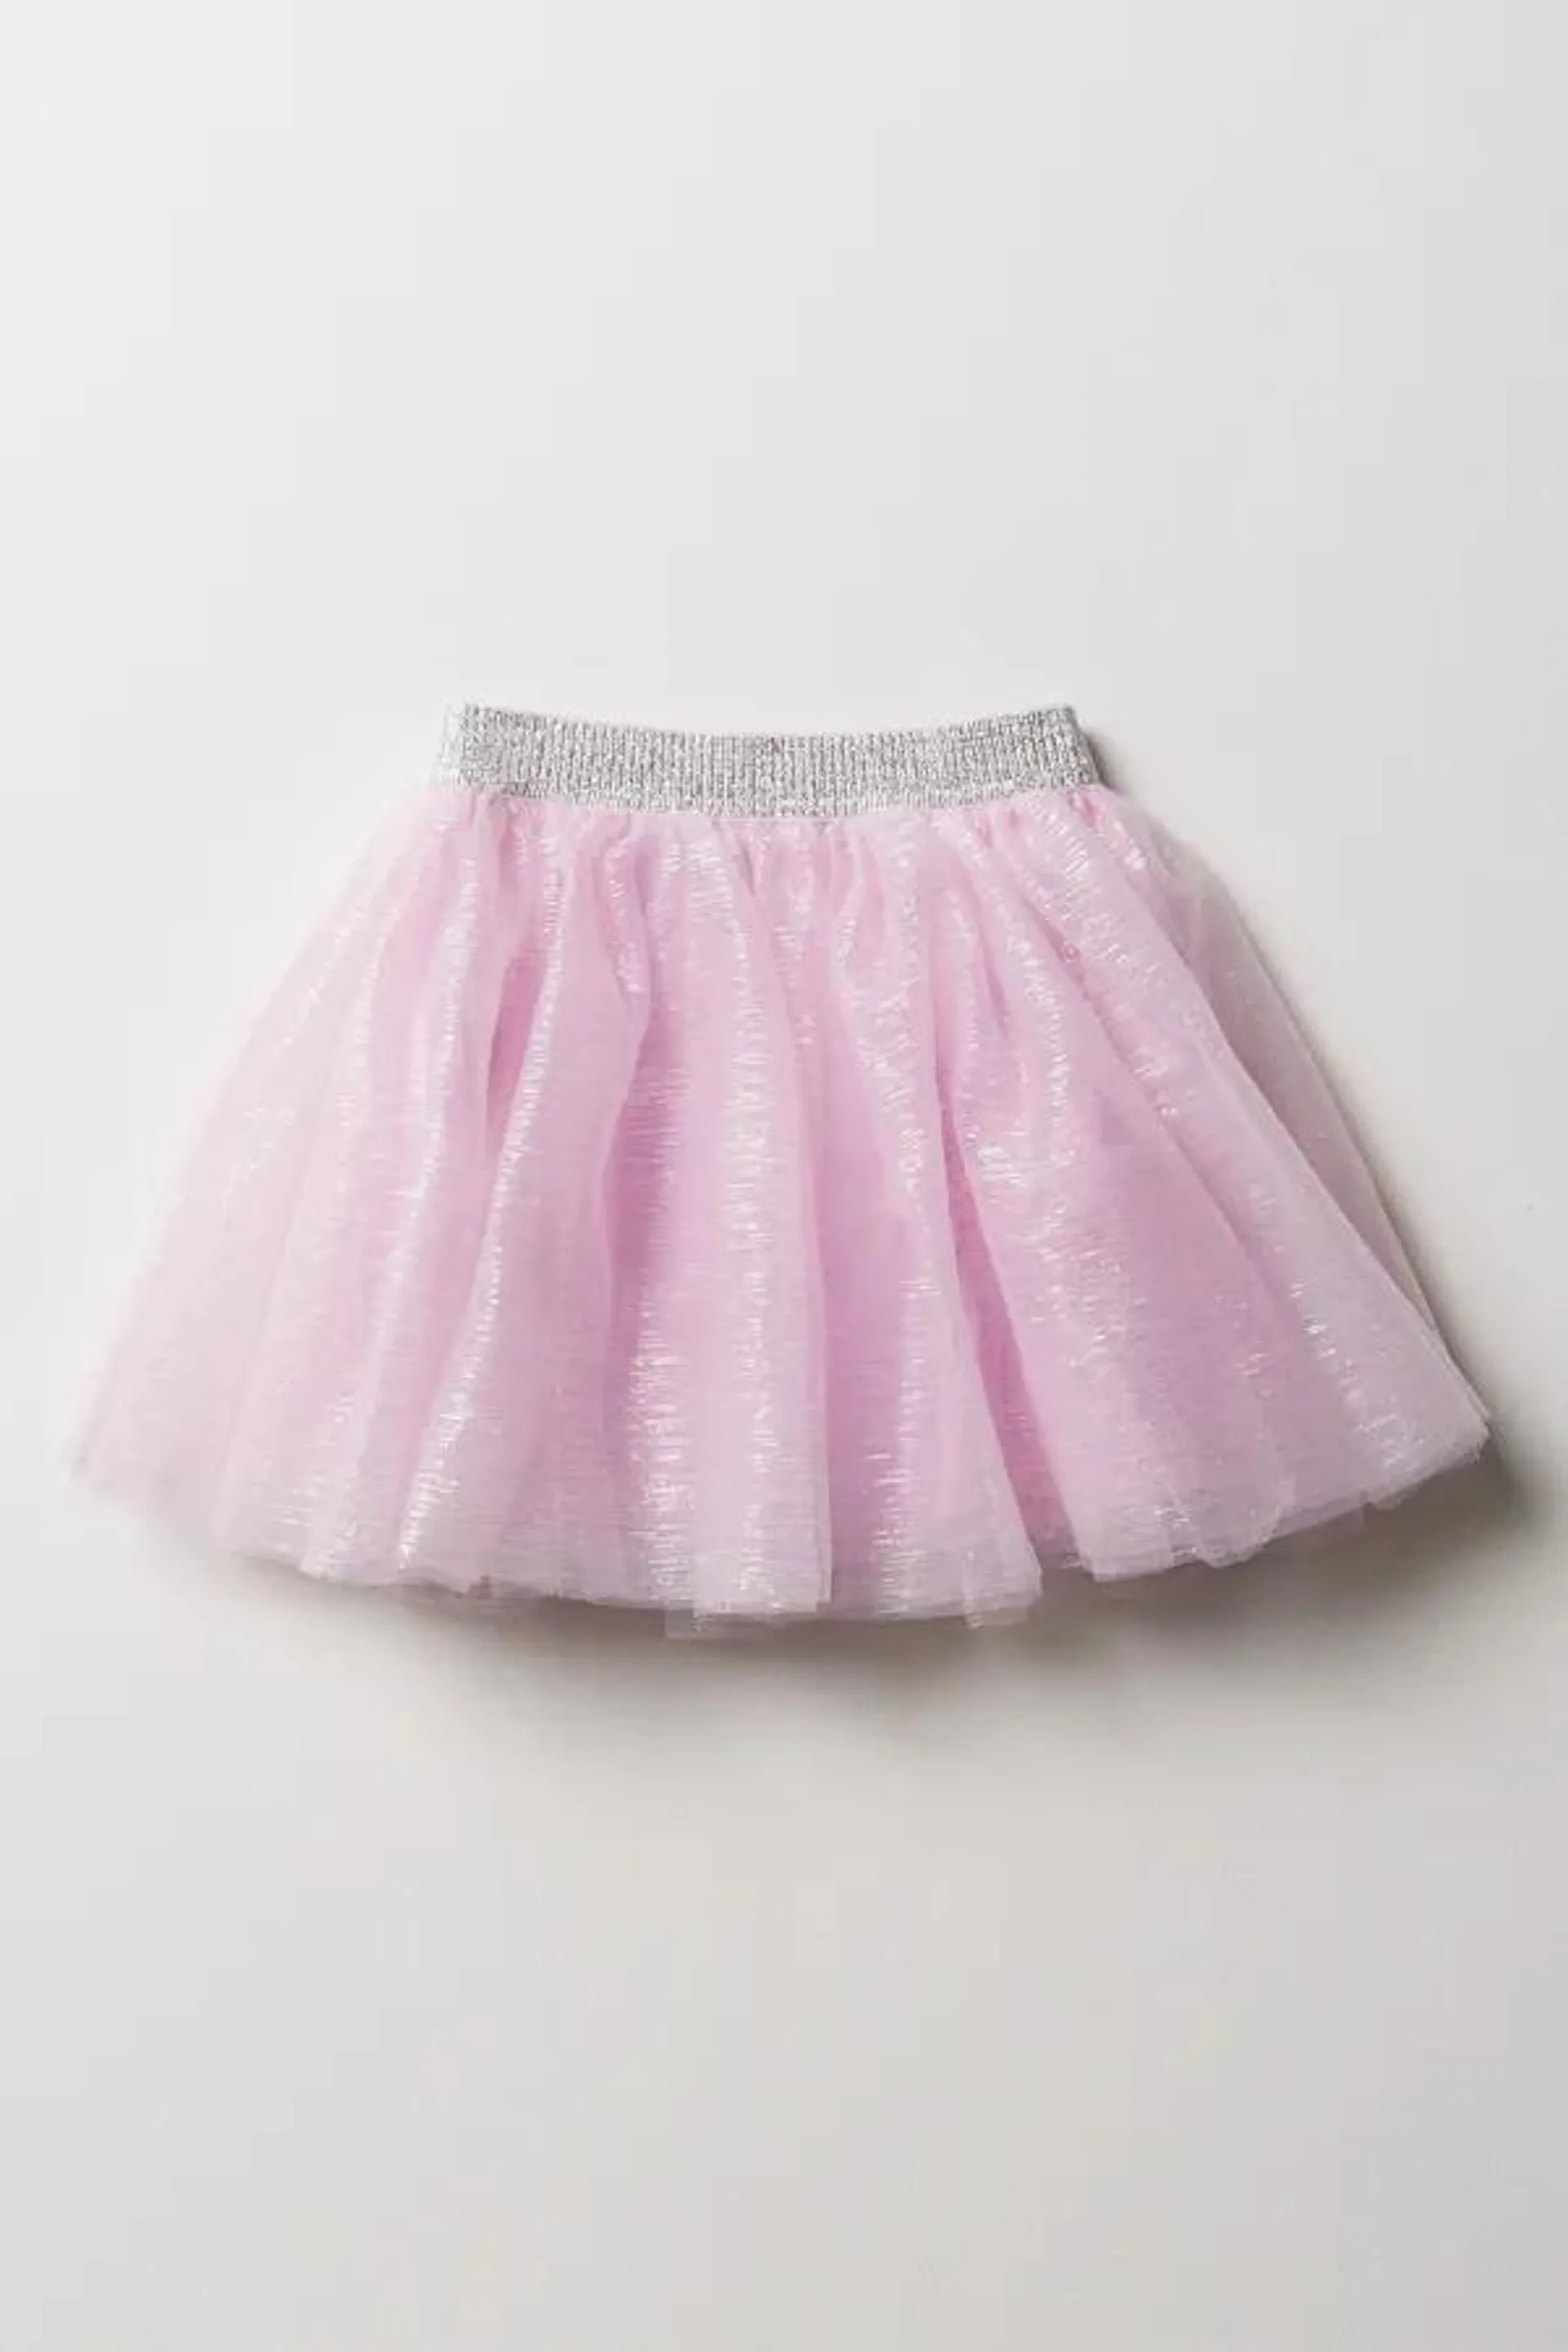 Tulle skirt pink